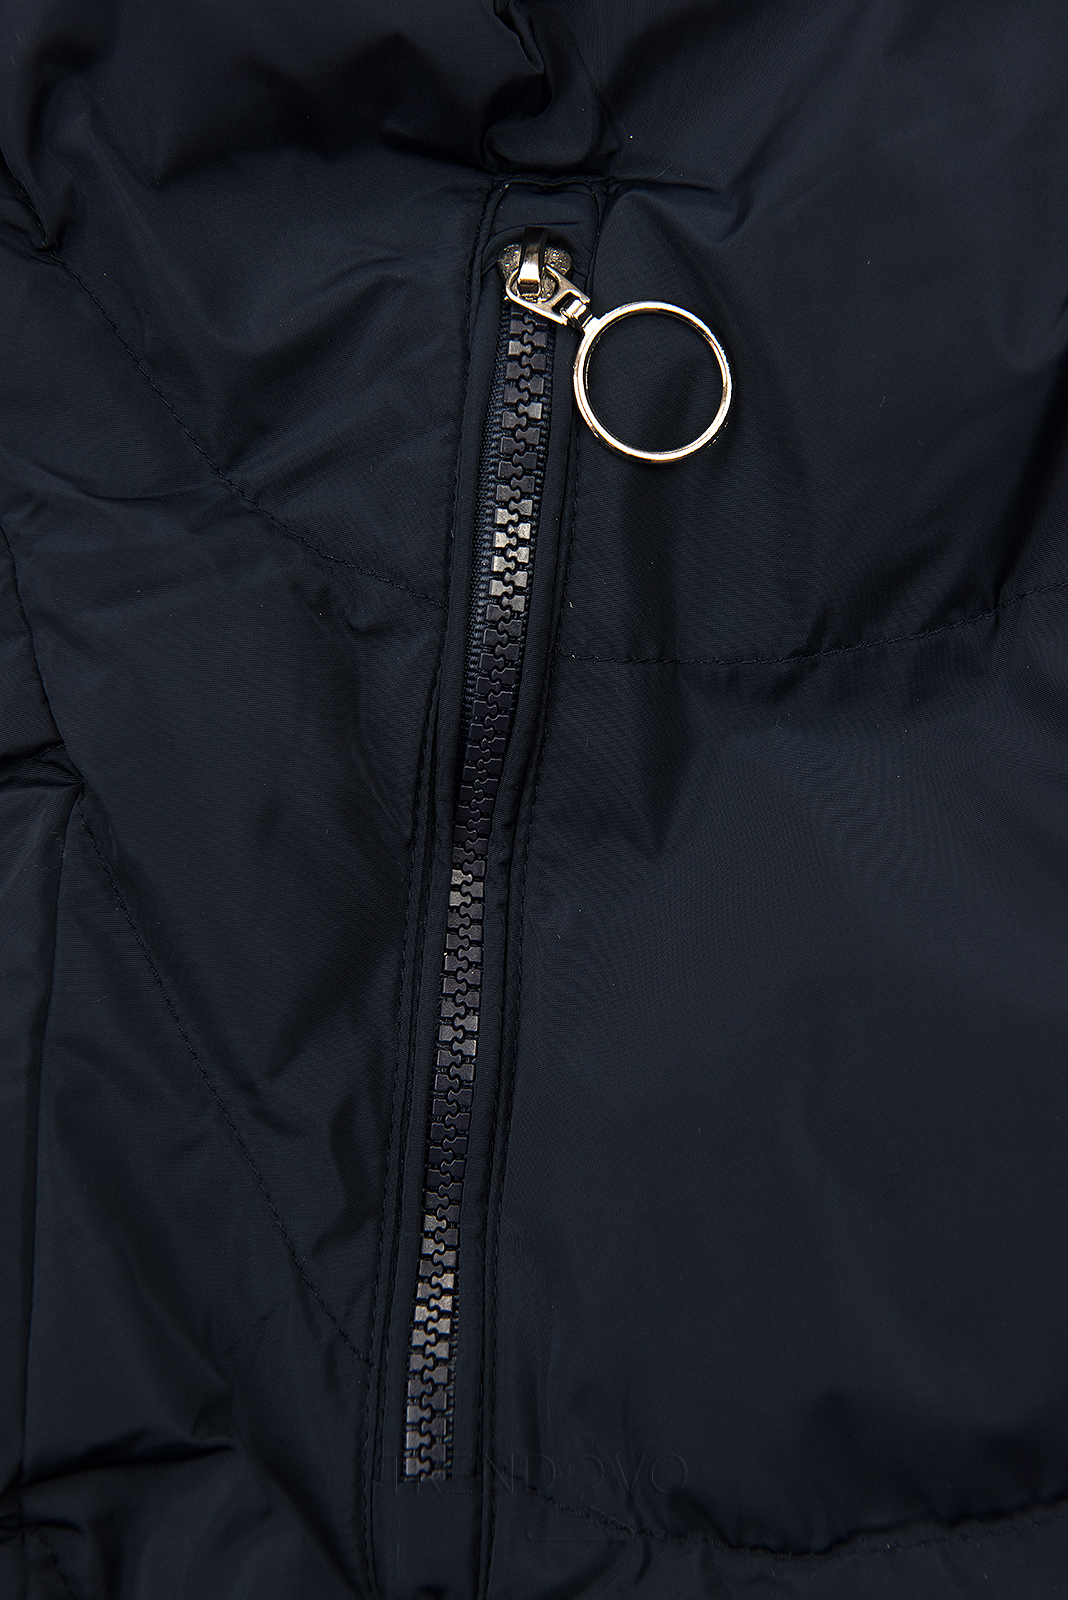 Tmavomodrá zimná bunda so strieborným lemom